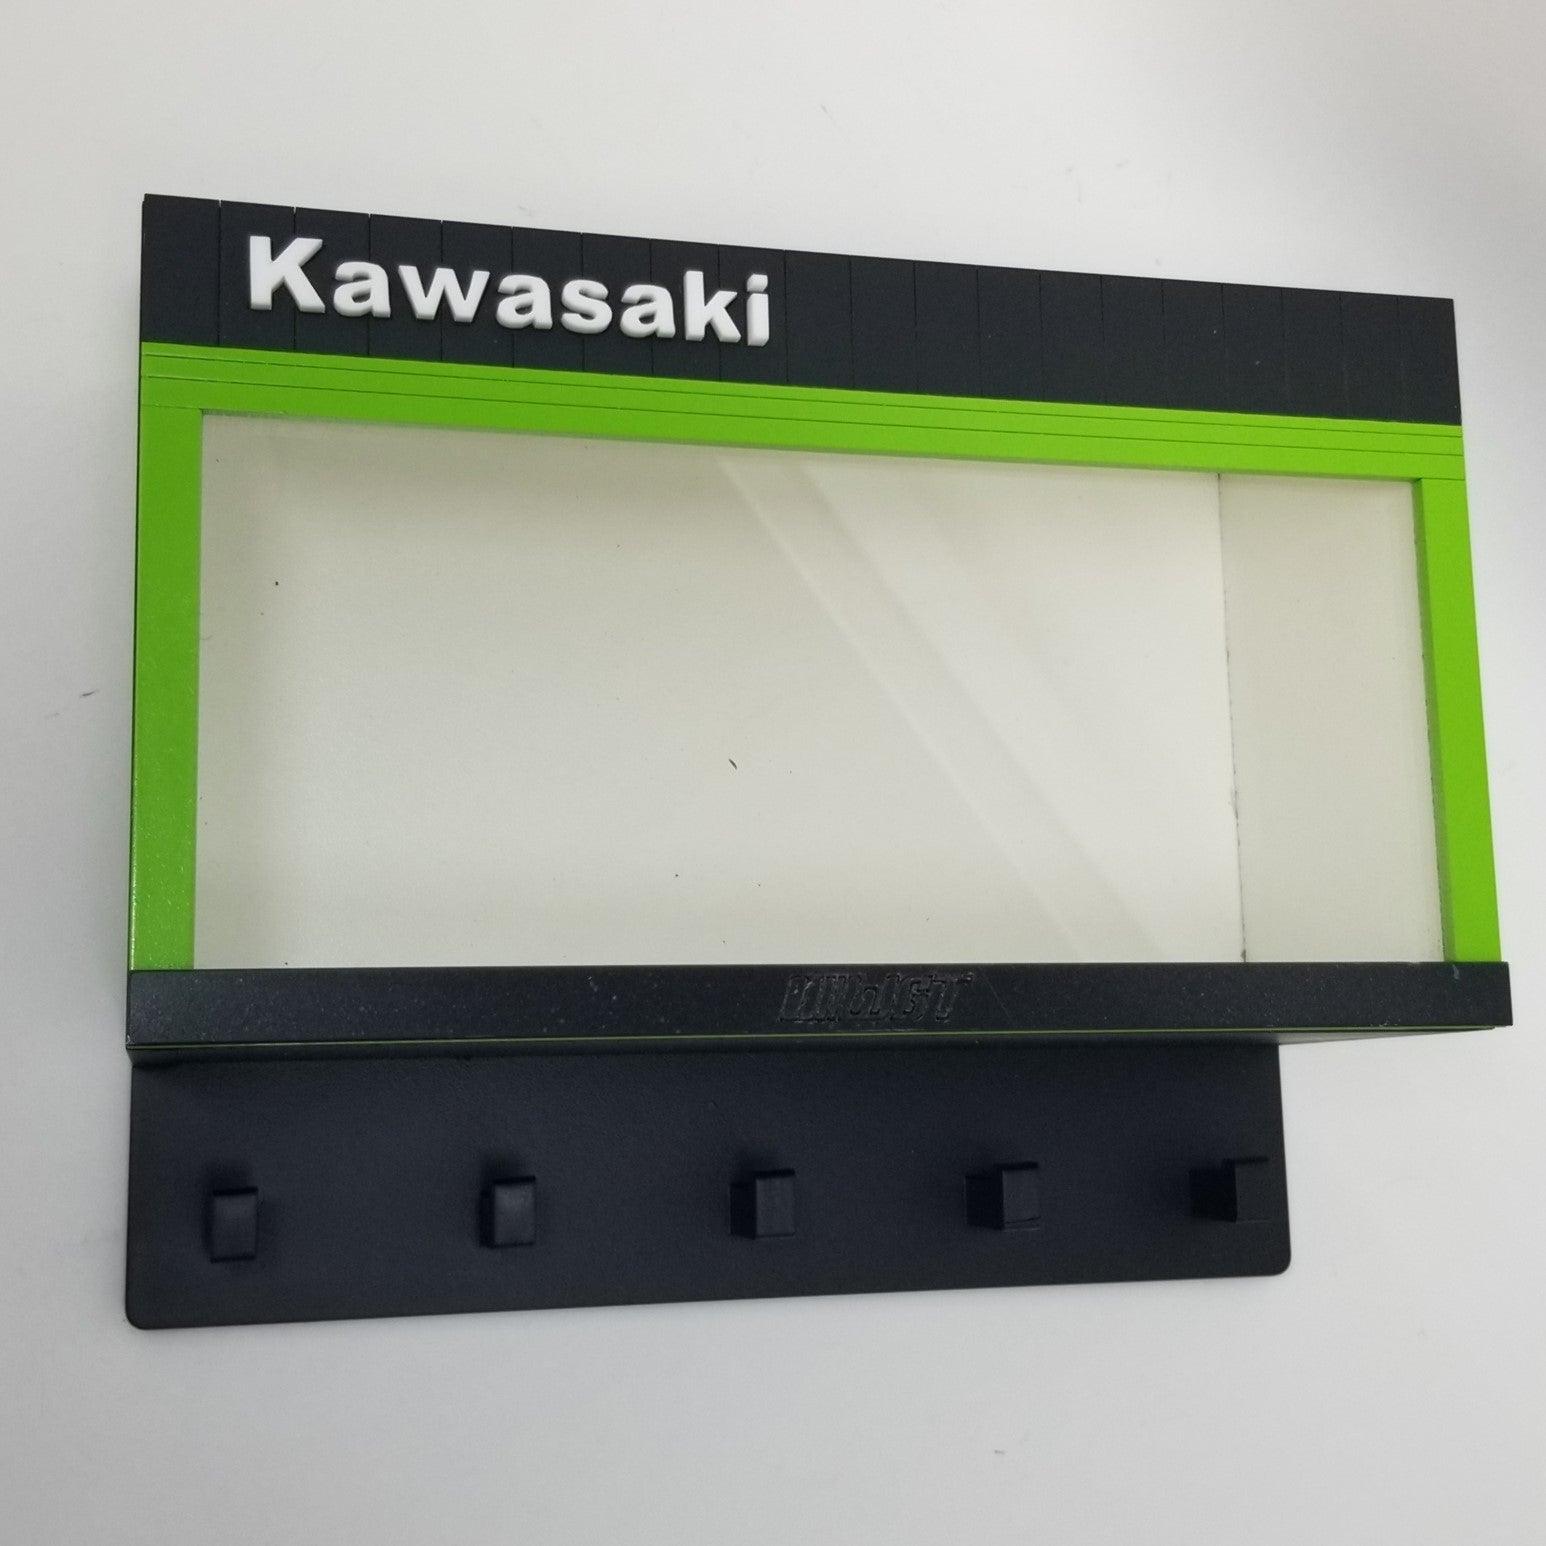 Kawasaki Dealership Wall Key Hook Rack - Exclusive item - Handcrafted Key Holder - Brazilian Shop